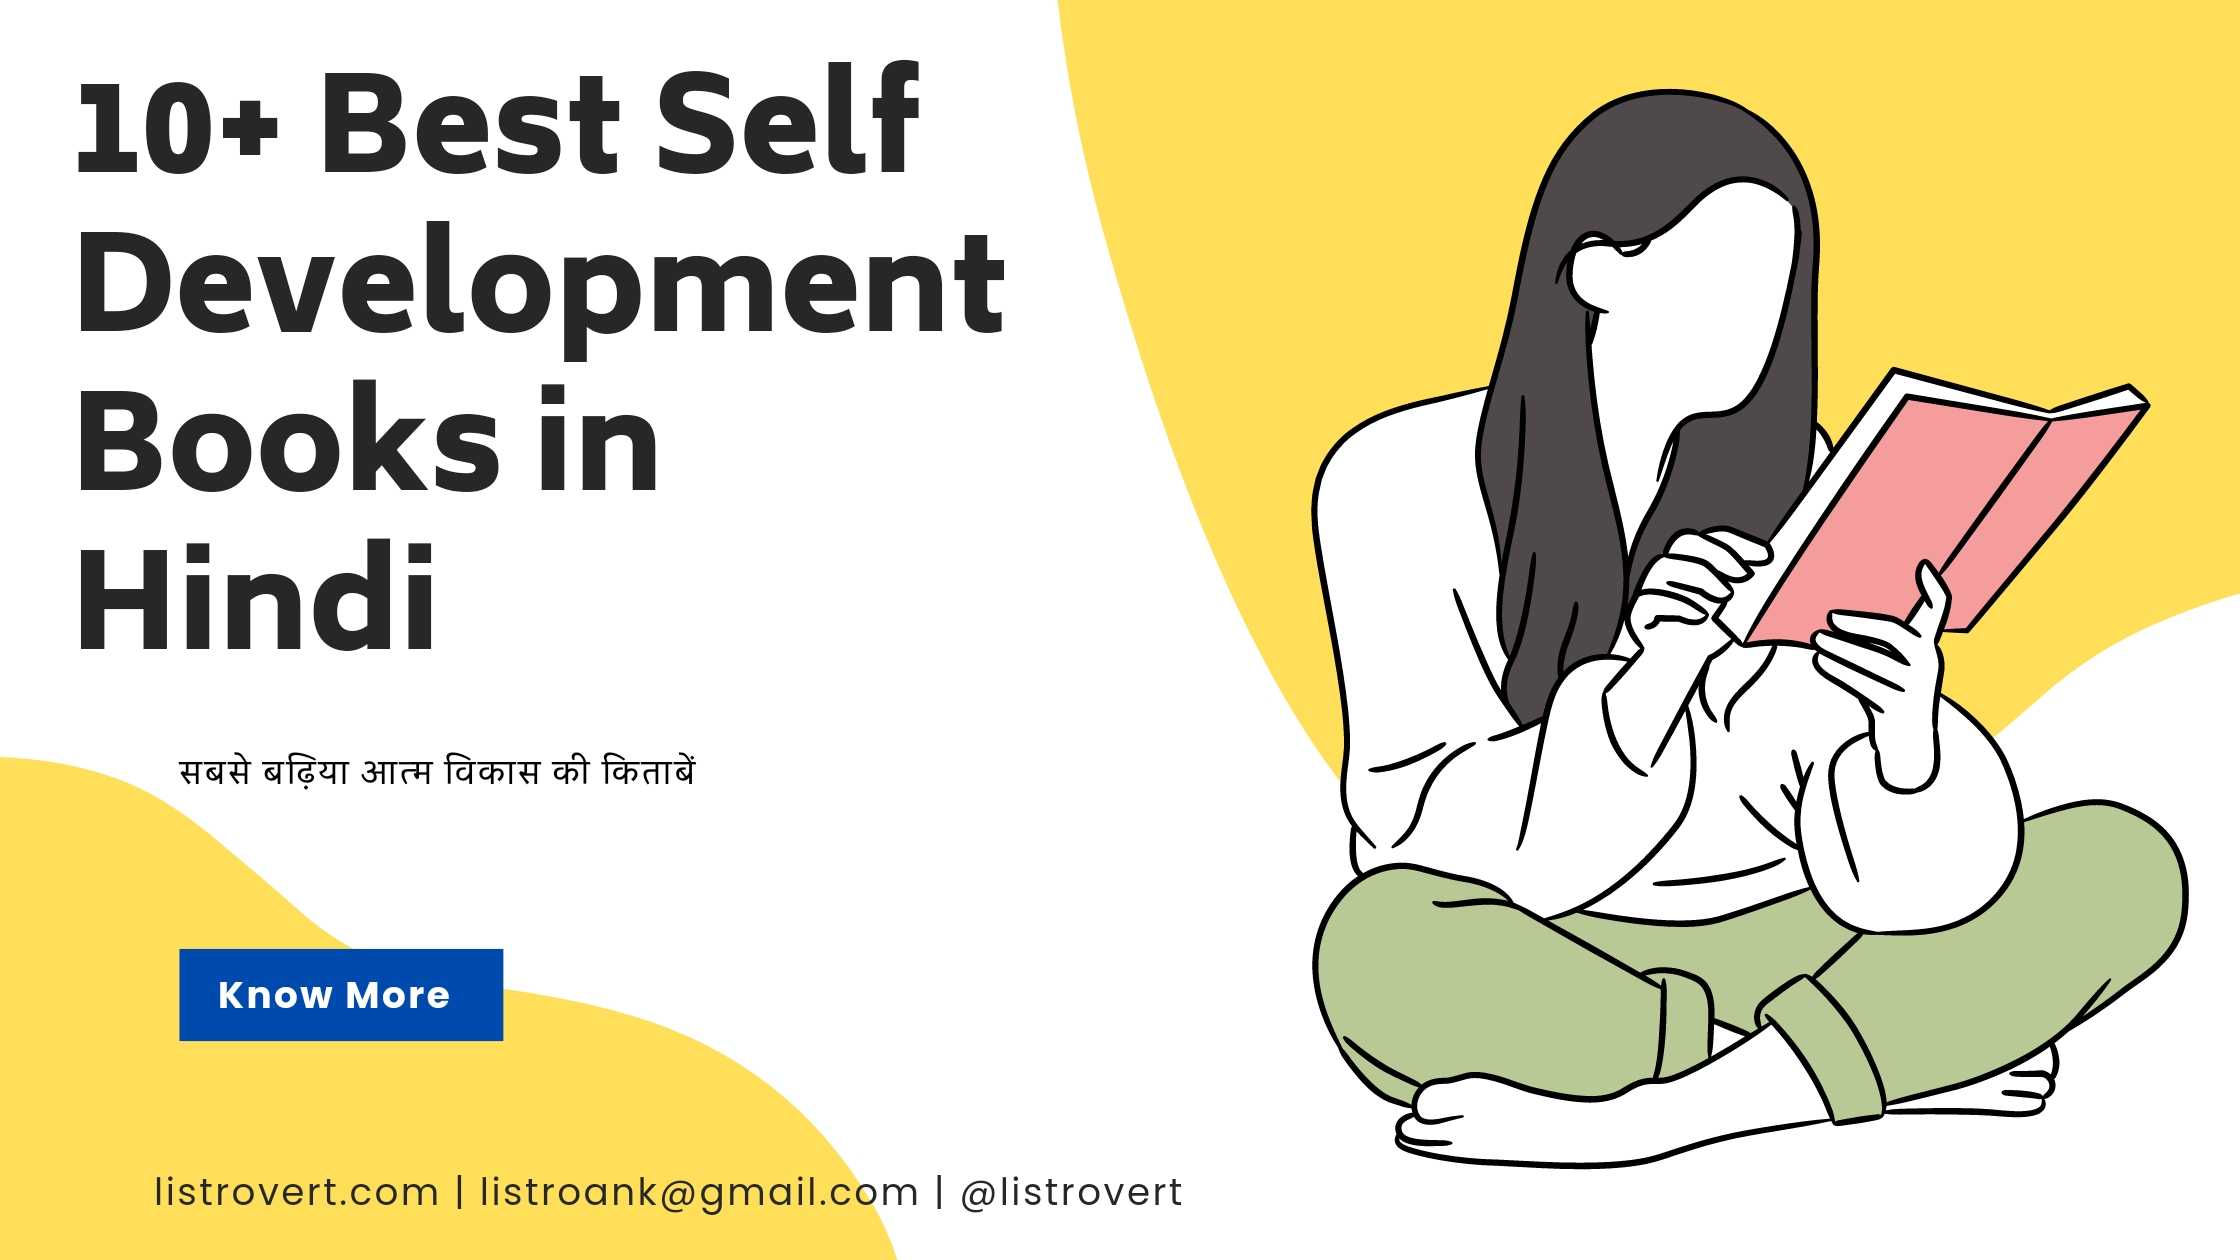 Self development books in Hindi